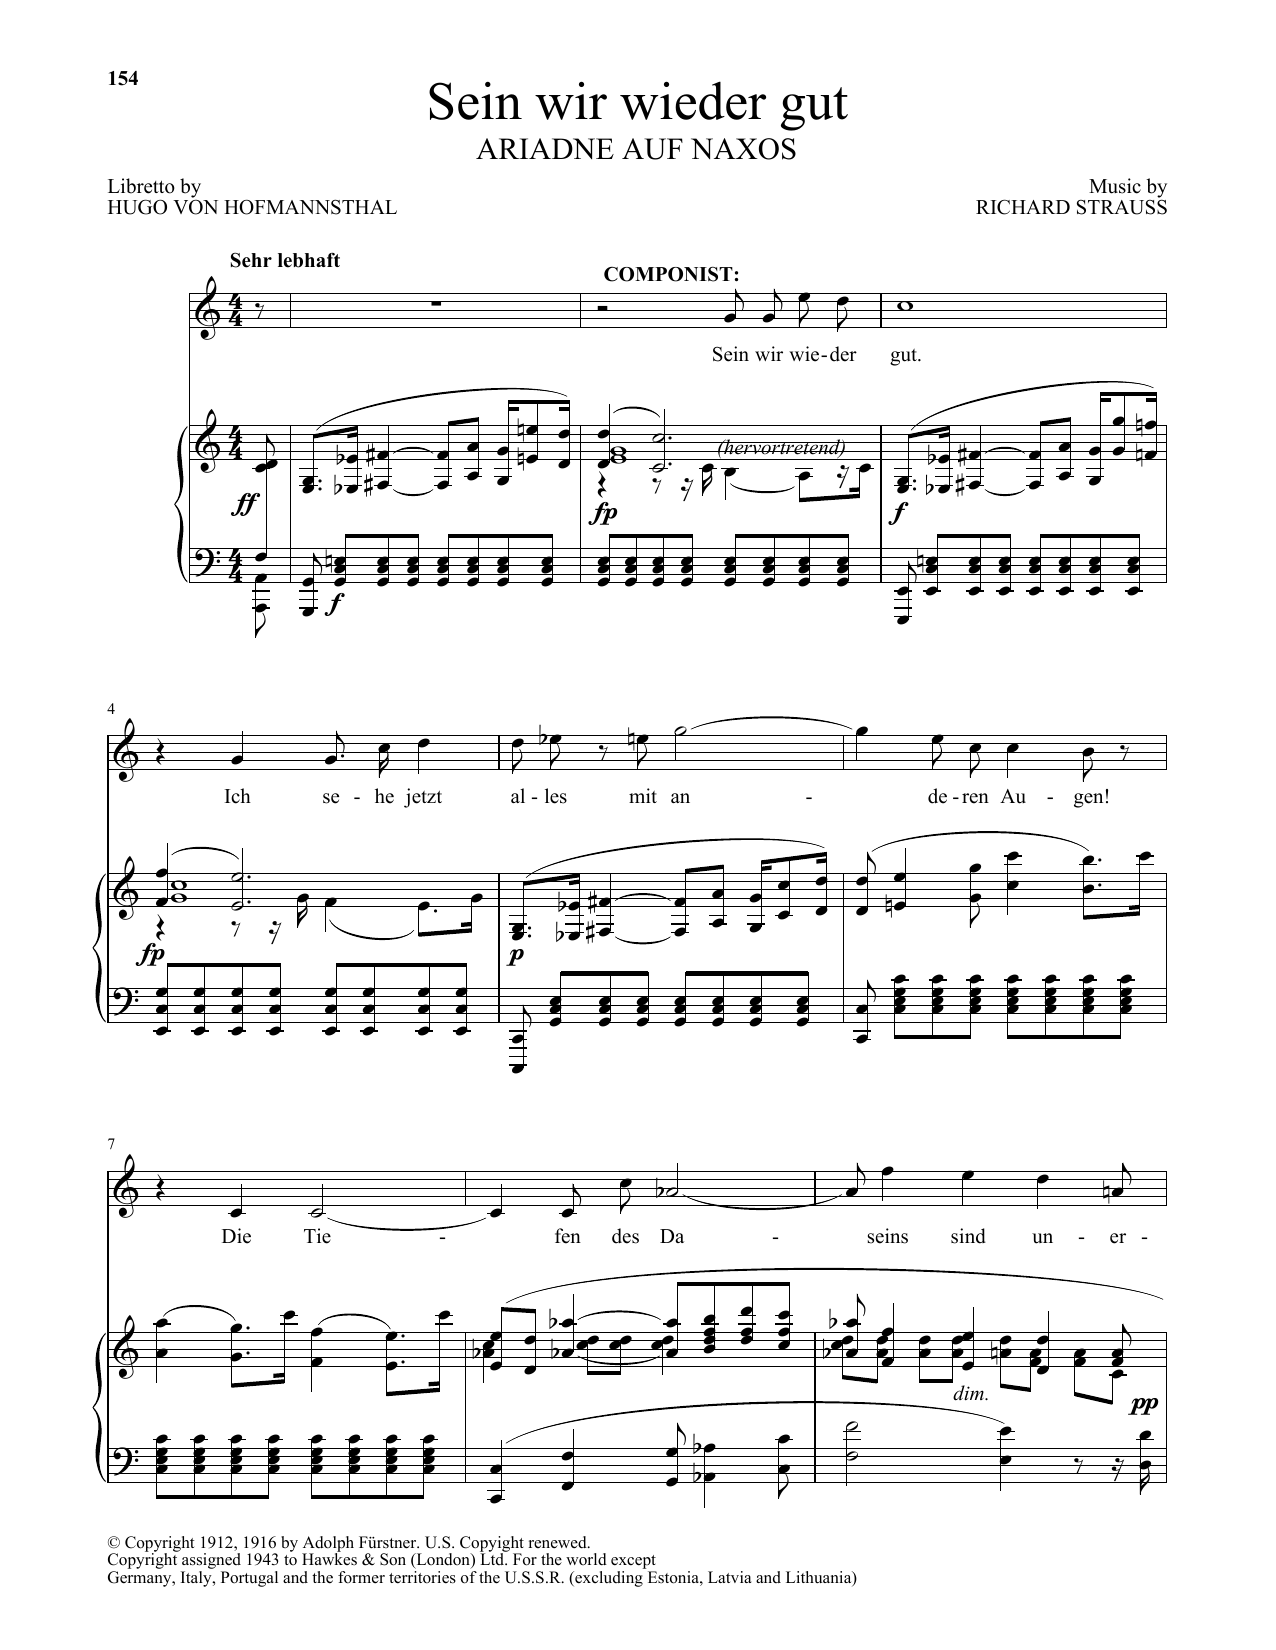 Richard Strauss Sein wir wieder gut (from Ariadne Auf Naxos) Sheet Music Notes & Chords for Piano & Vocal - Download or Print PDF